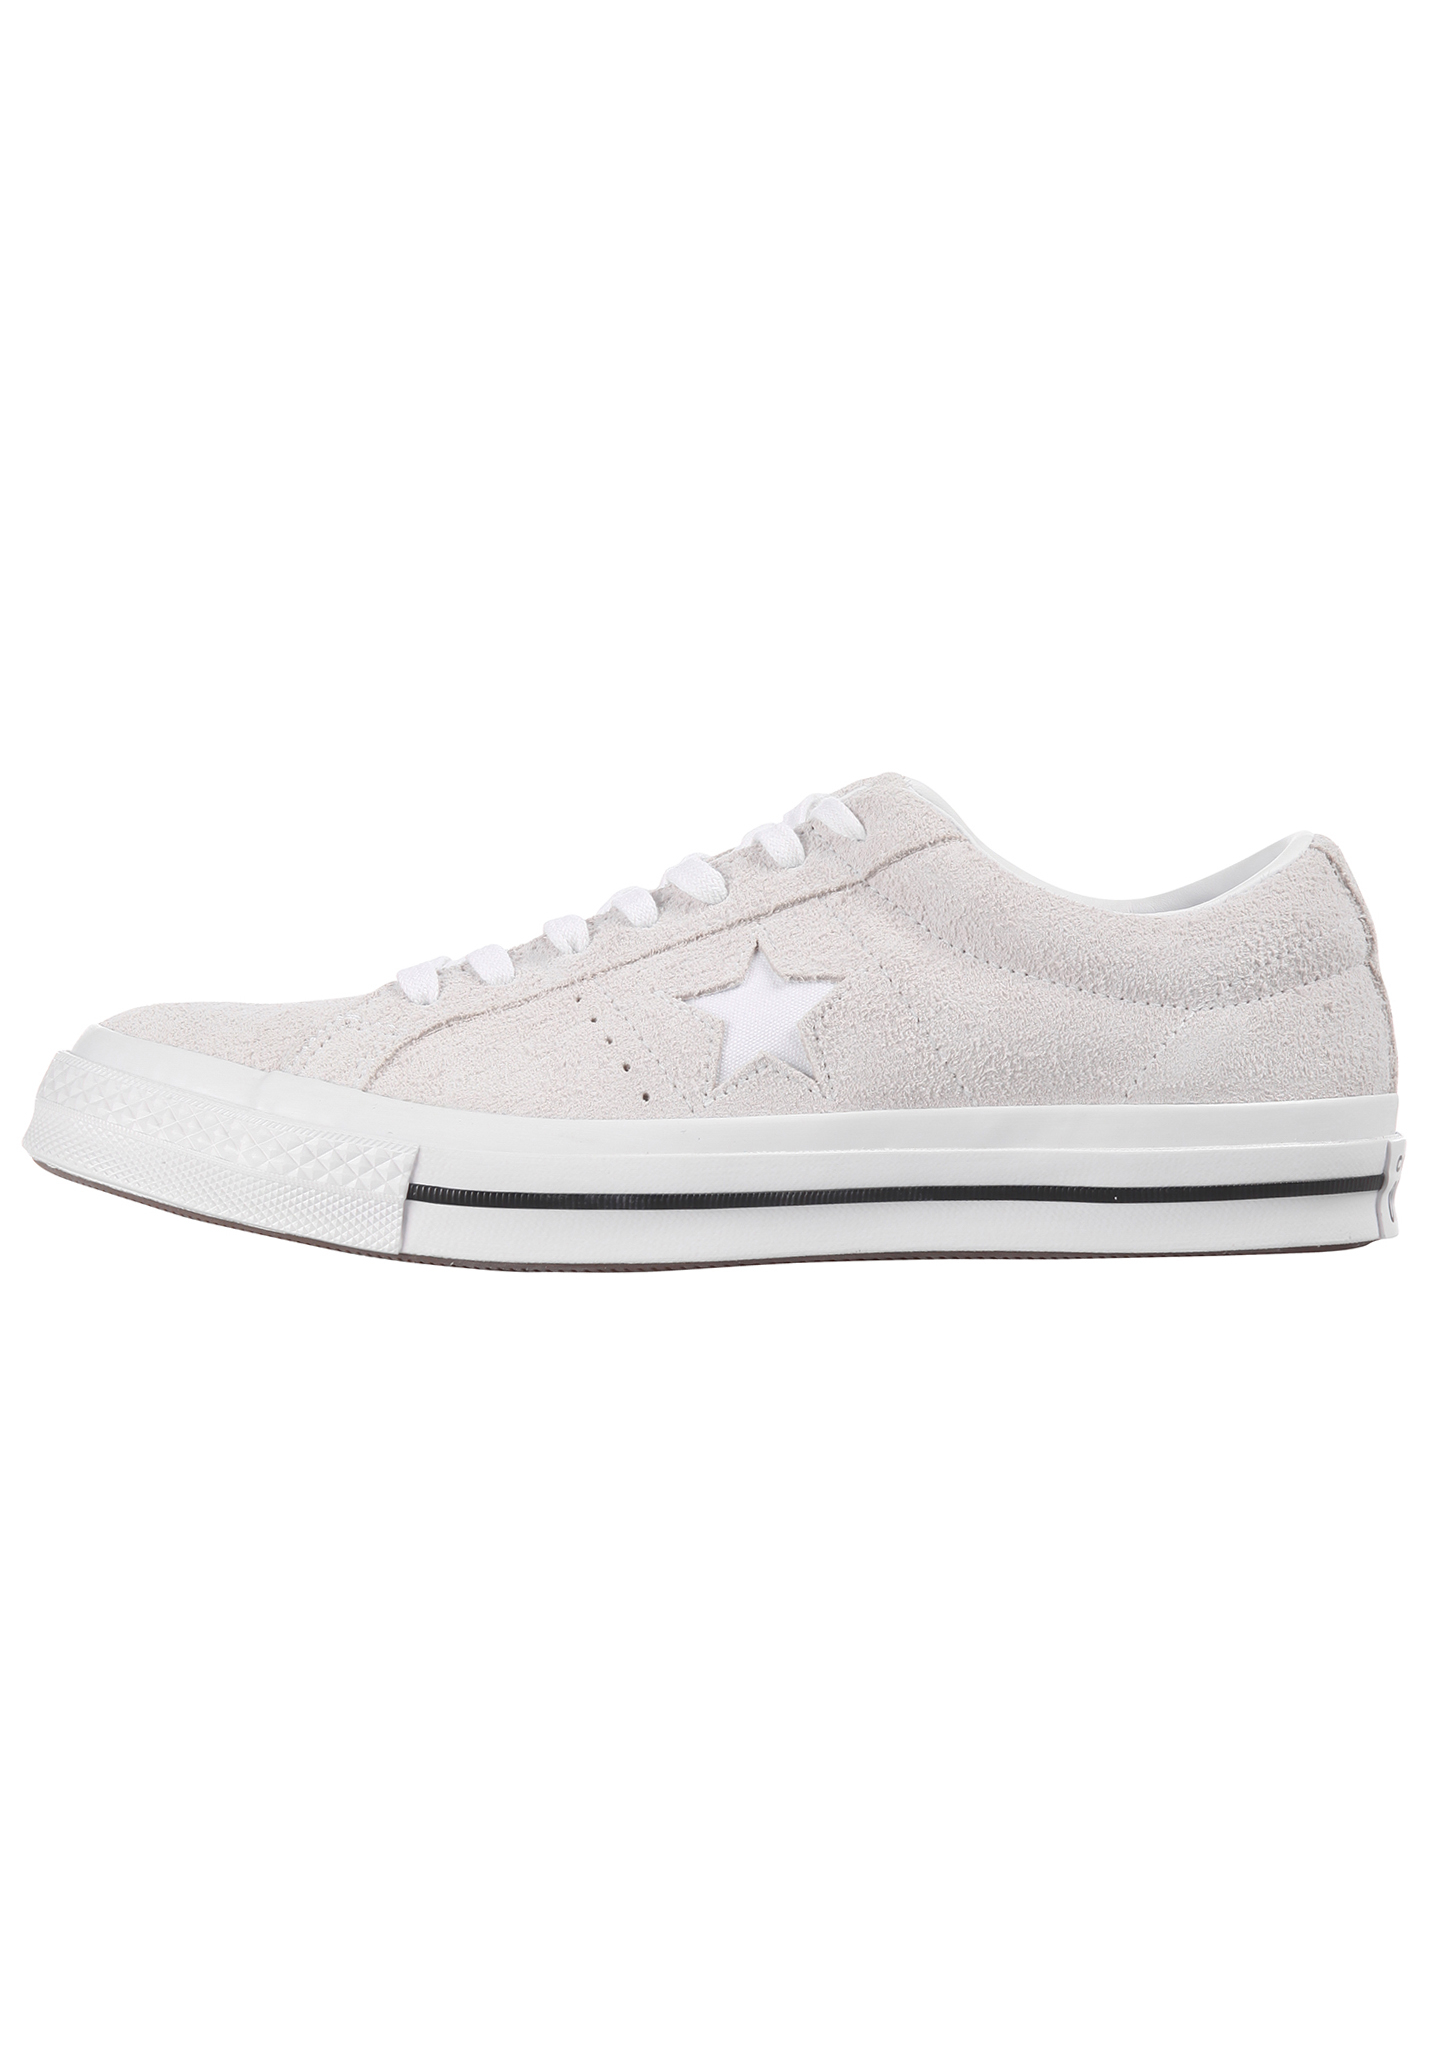 Converse One Star Ox Sneaker white 48